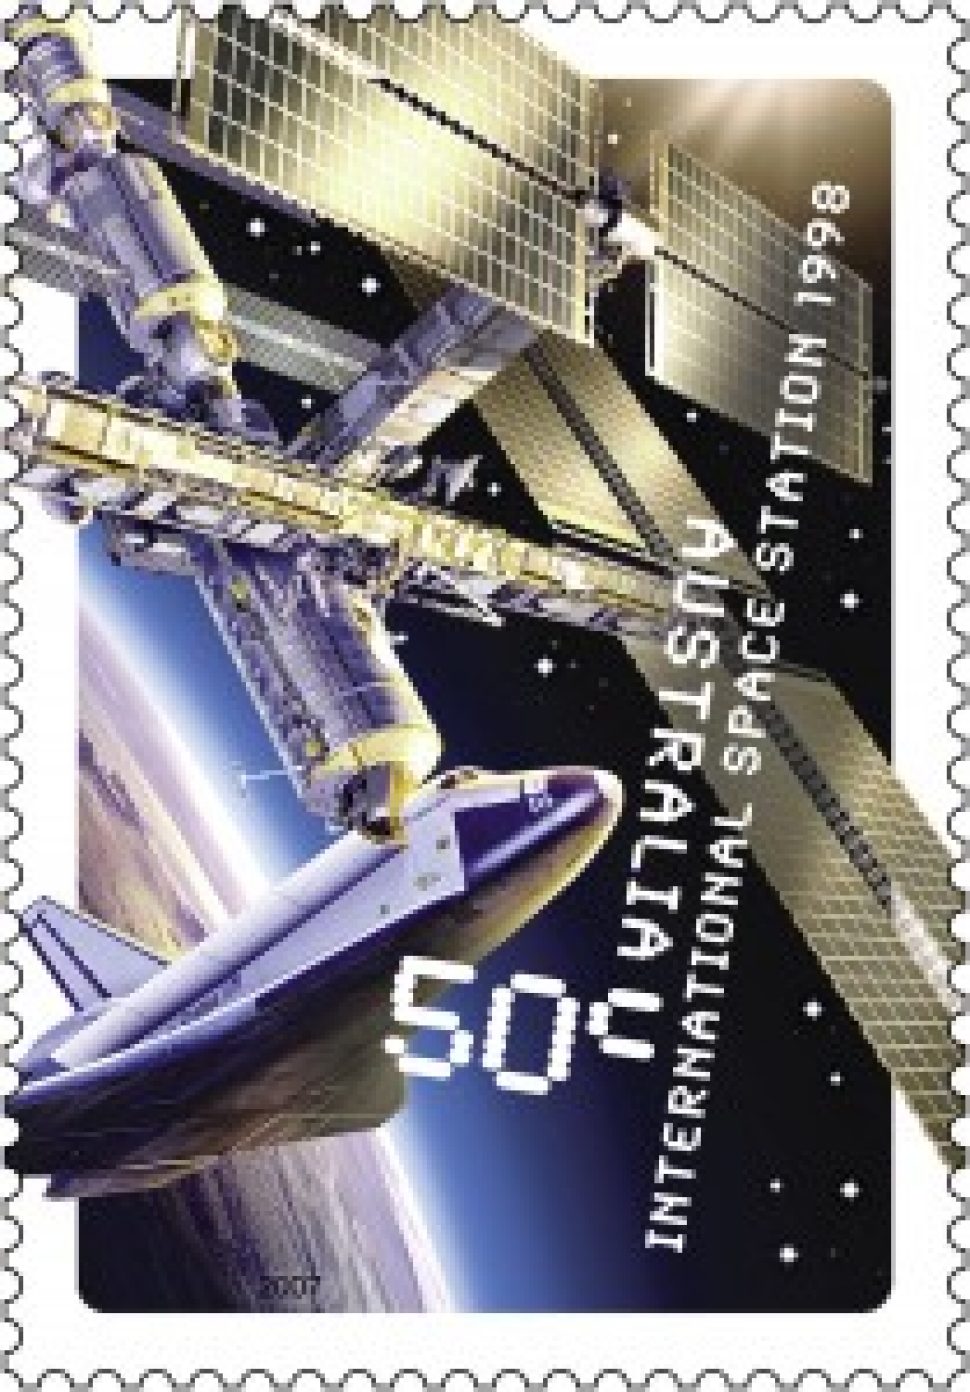 International Space Station 1998